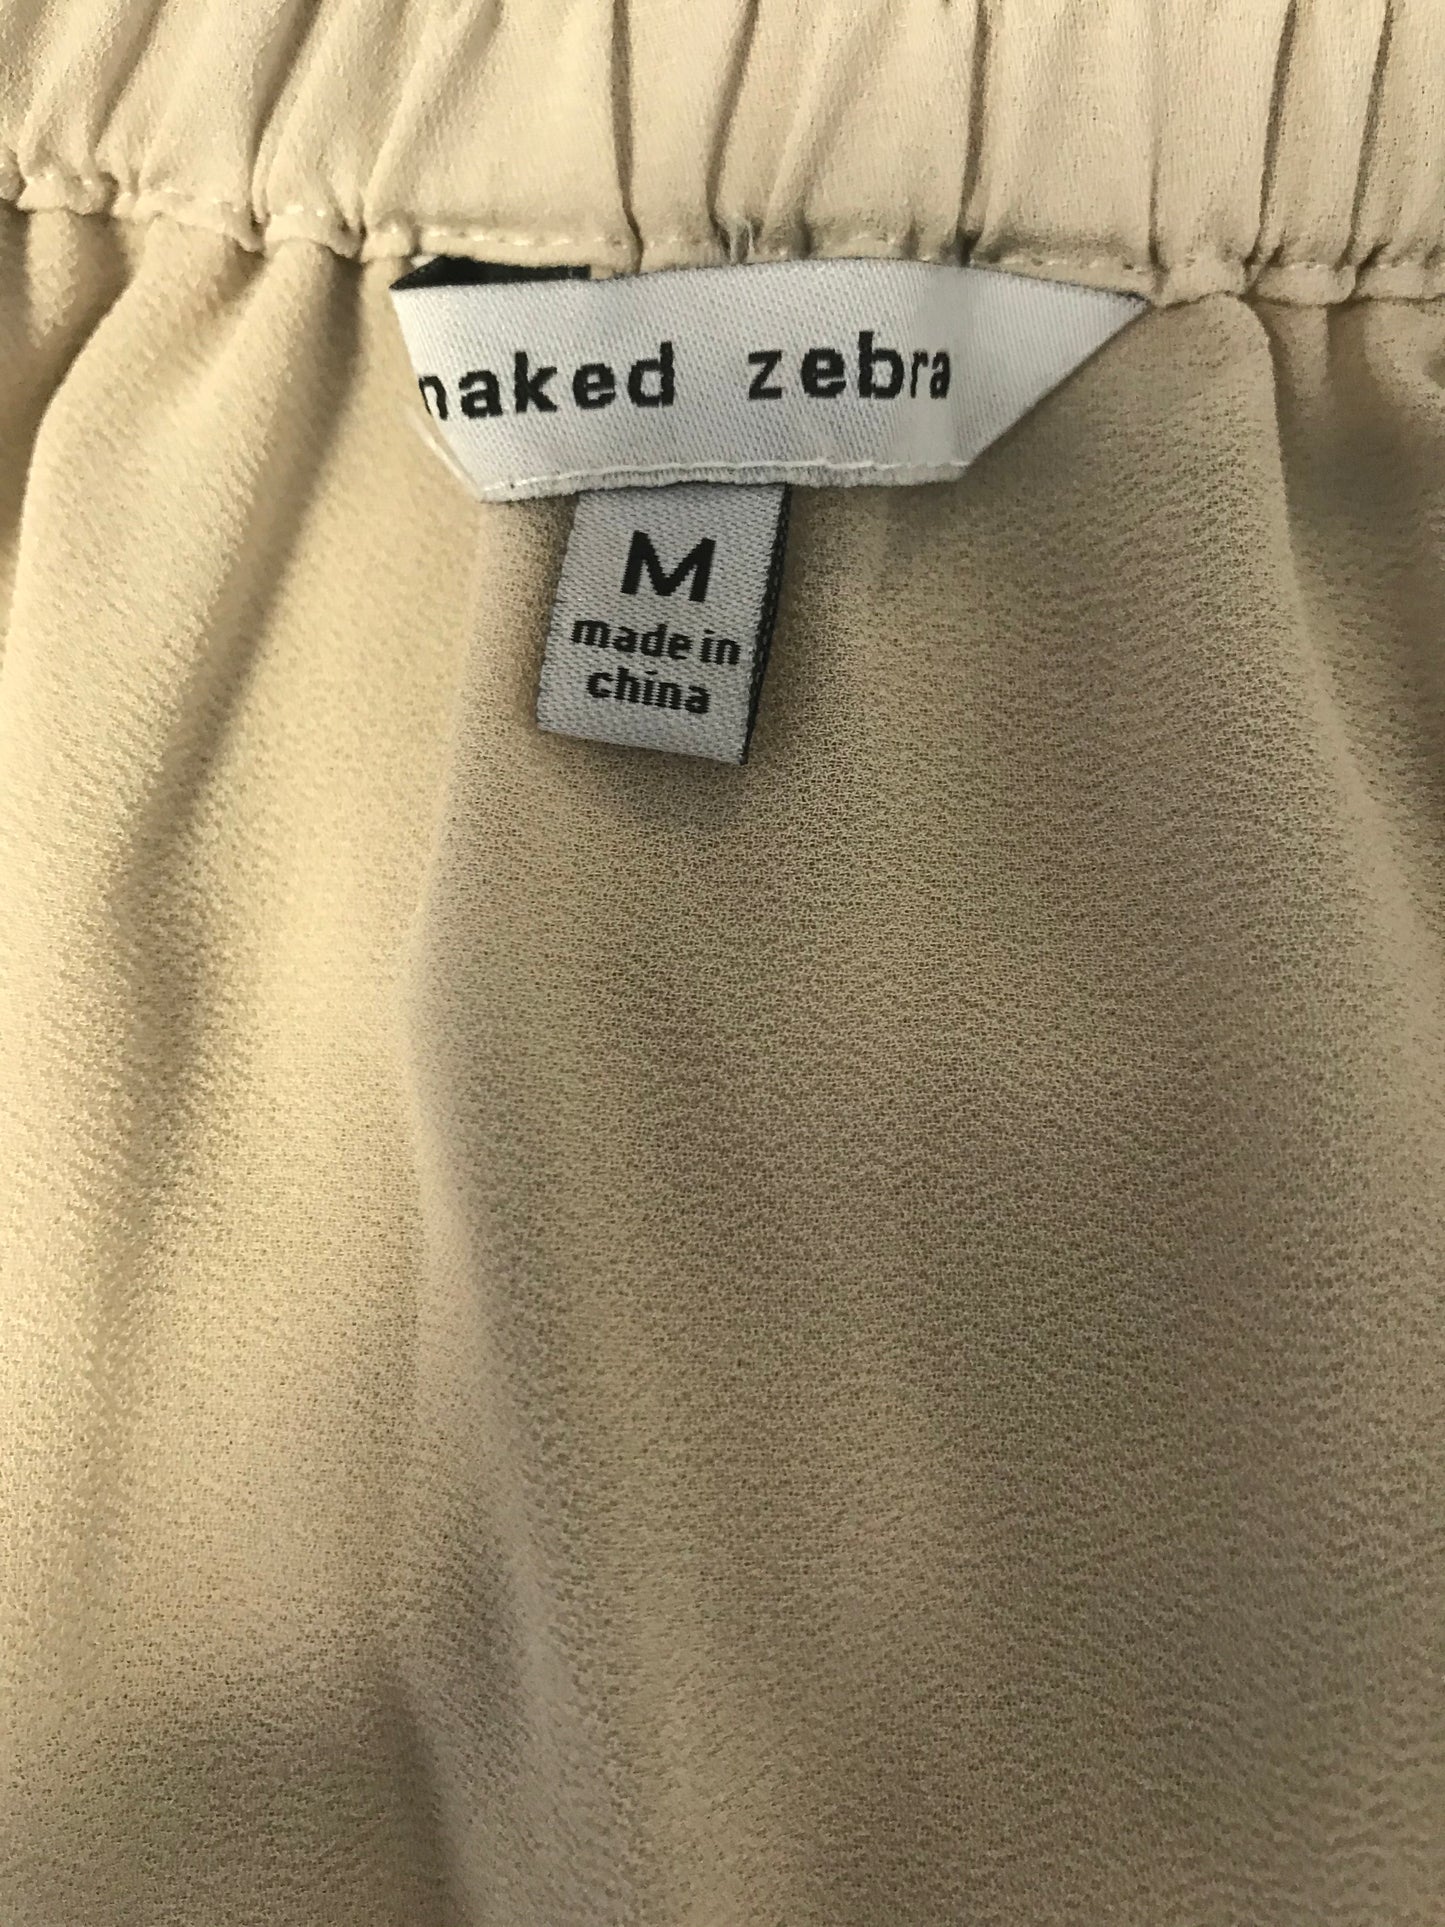 Naked Zebra shirt